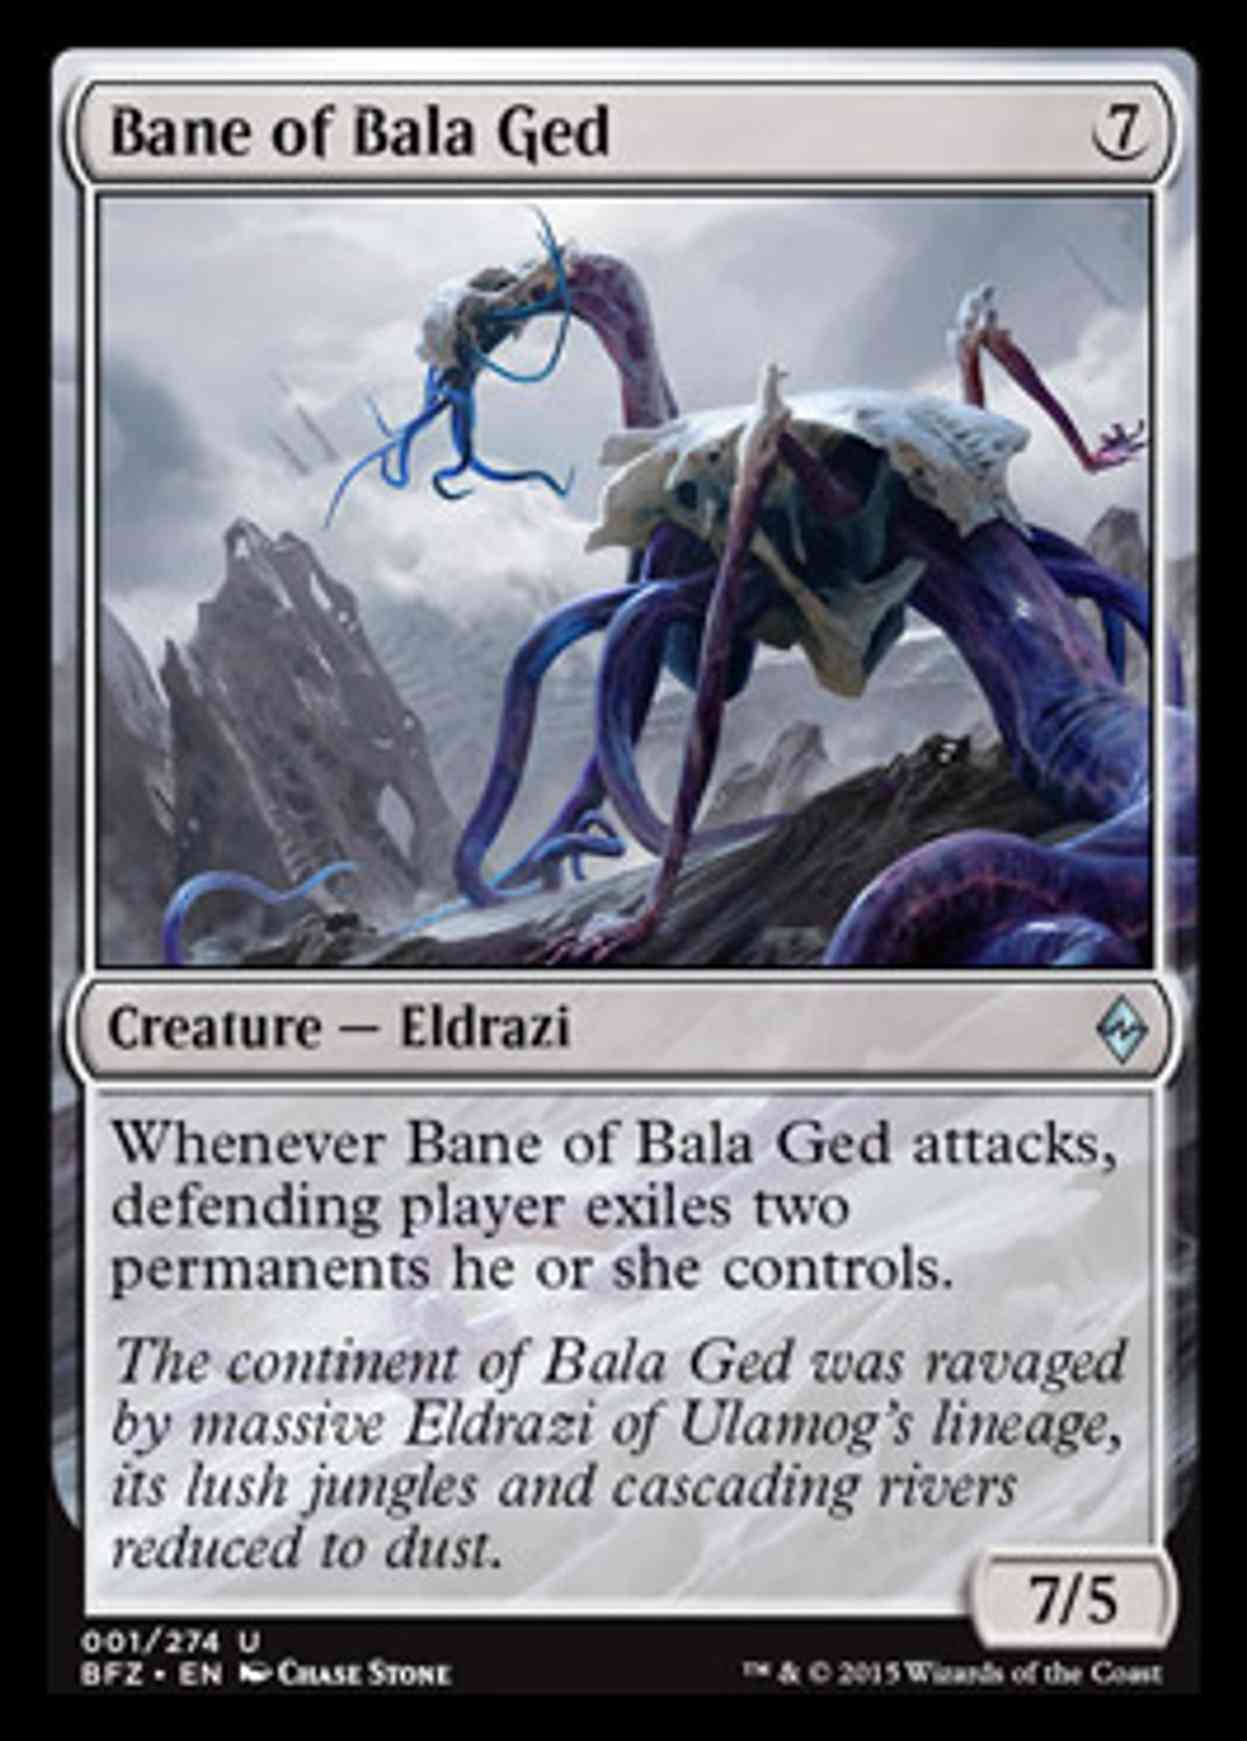 Bane of Bala Ged magic card front